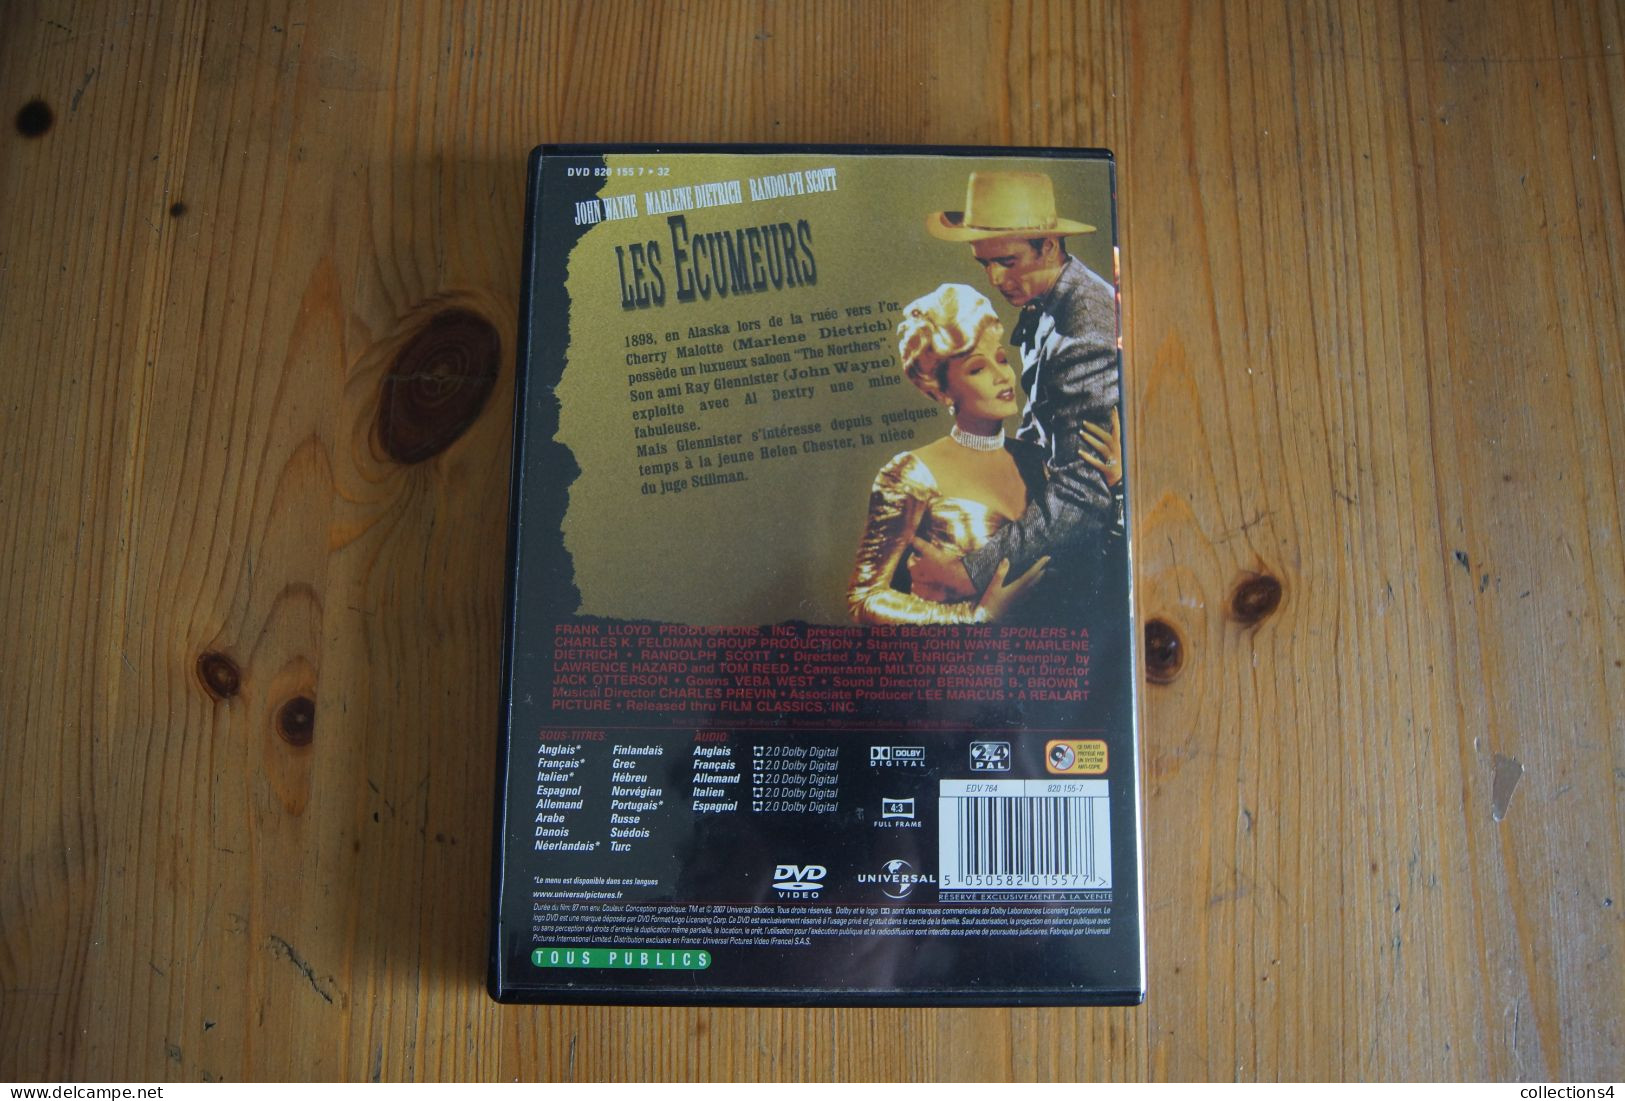 LES ECUMEURS JOHN WAYNE MARLENE DIETRICH RANDOLPH SCOTT DVD FILM DE 1939 - Western/ Cowboy